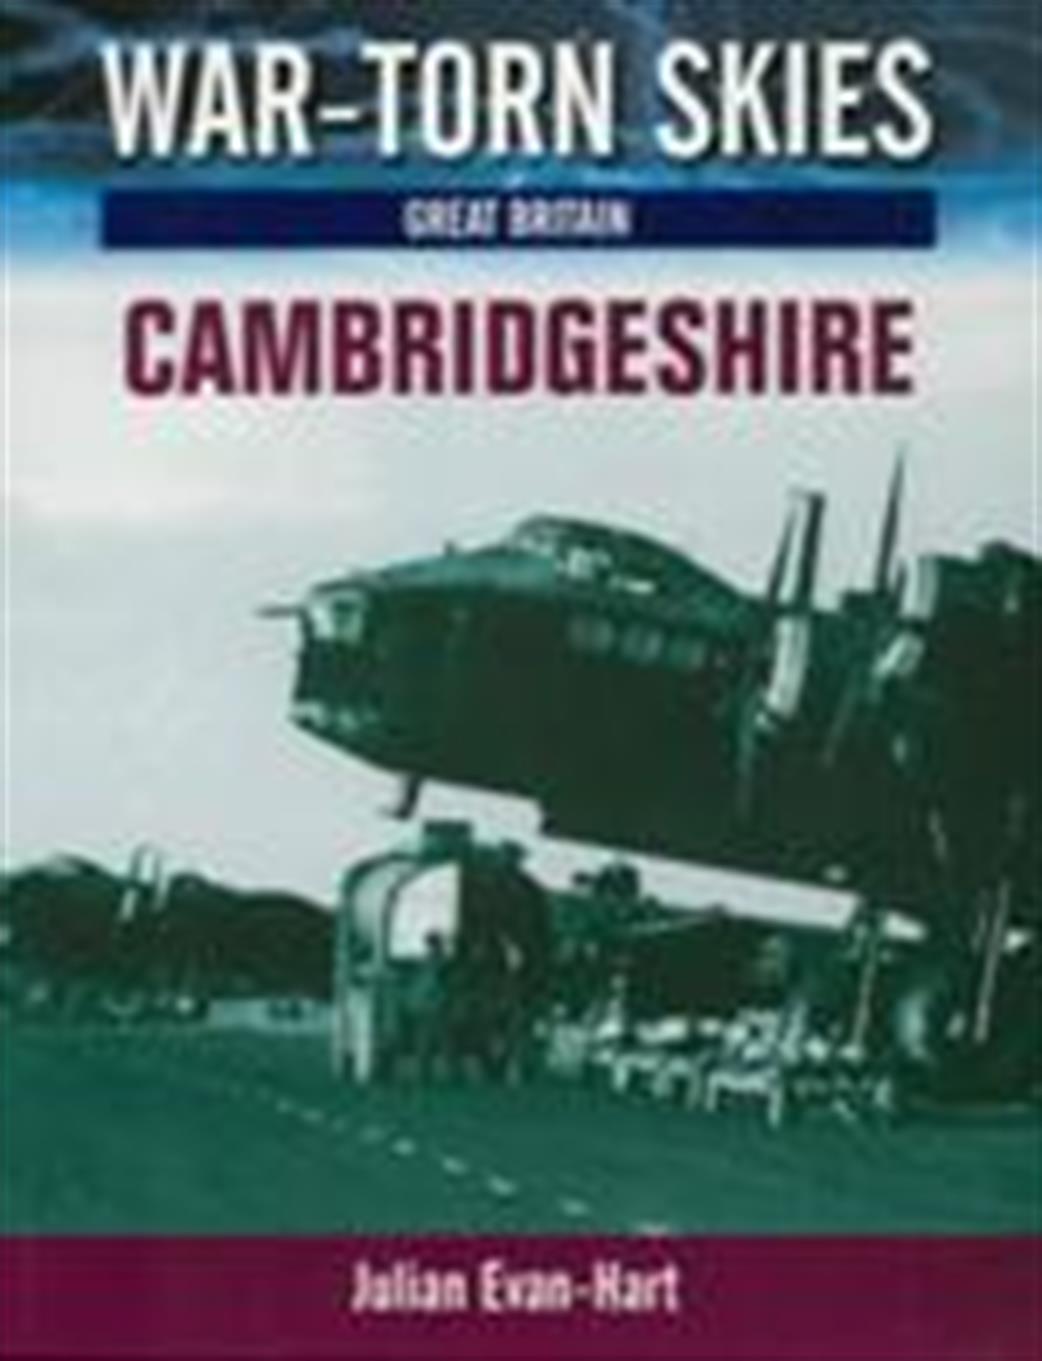 9780955473593 War-Torn Skies of Great Britain, Cambridgeshire By Julian Evan-Hart